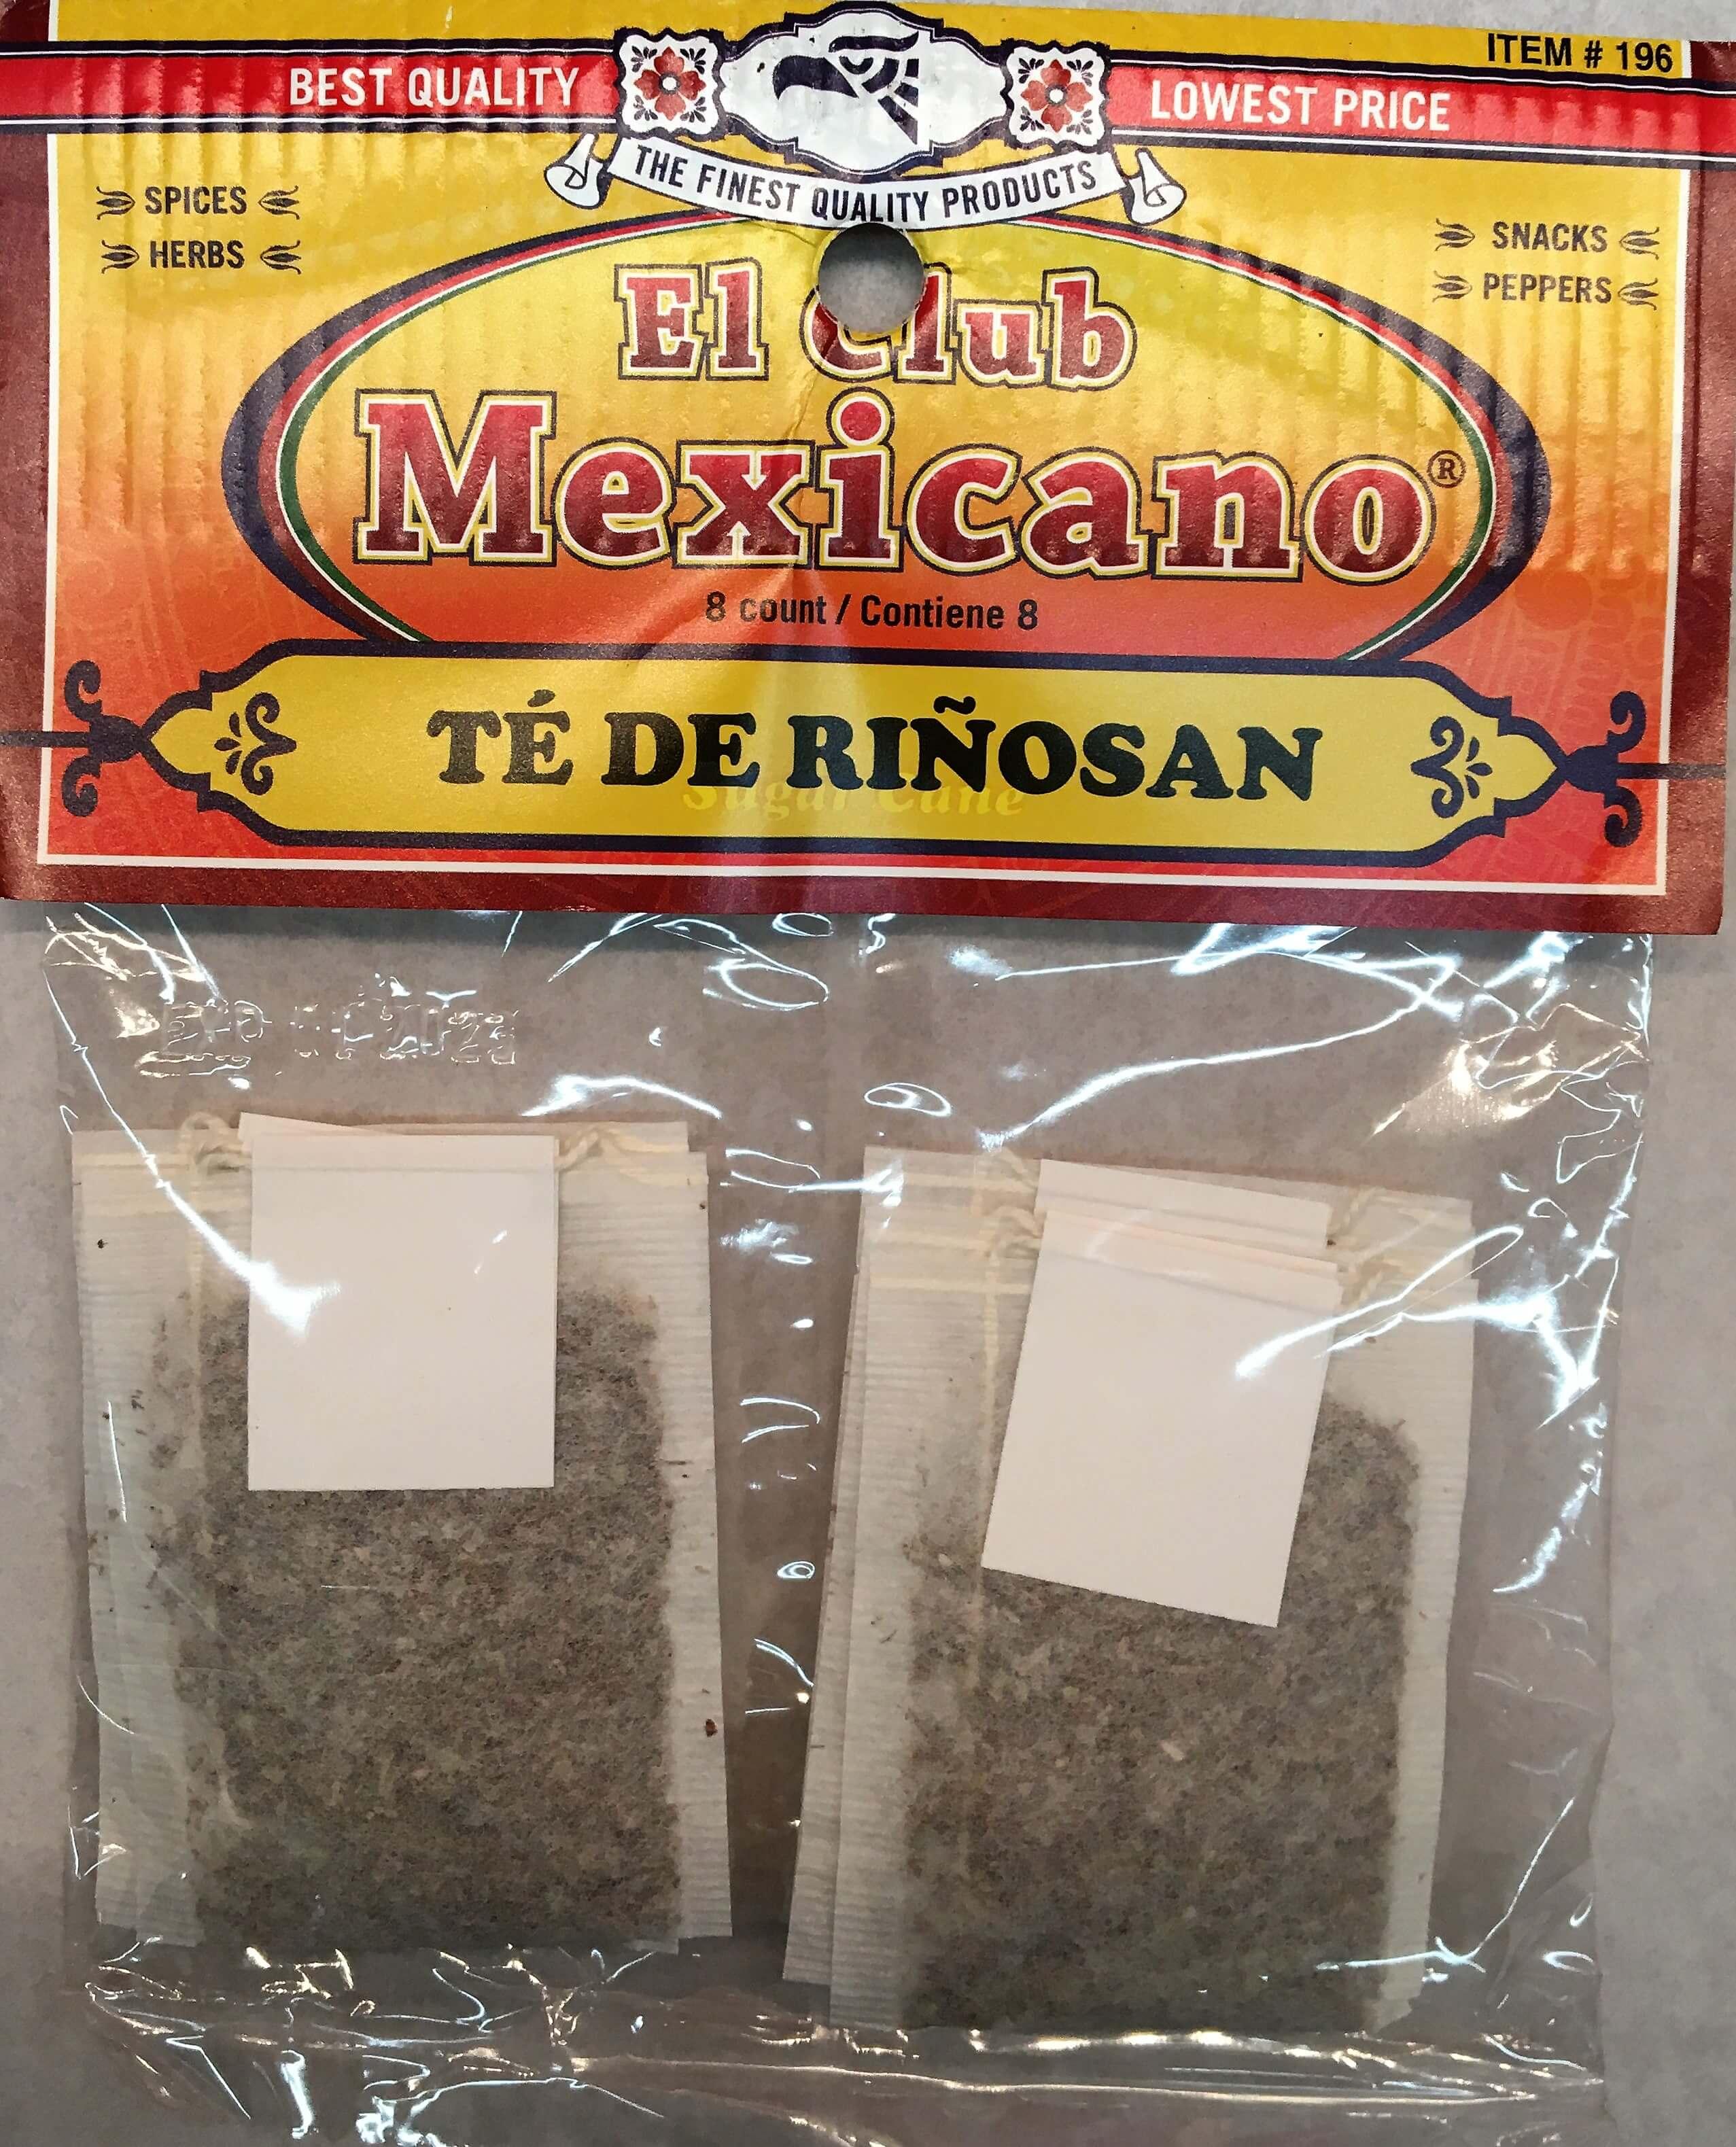 El Club Mexicano - Riñosan Tea 8 count.